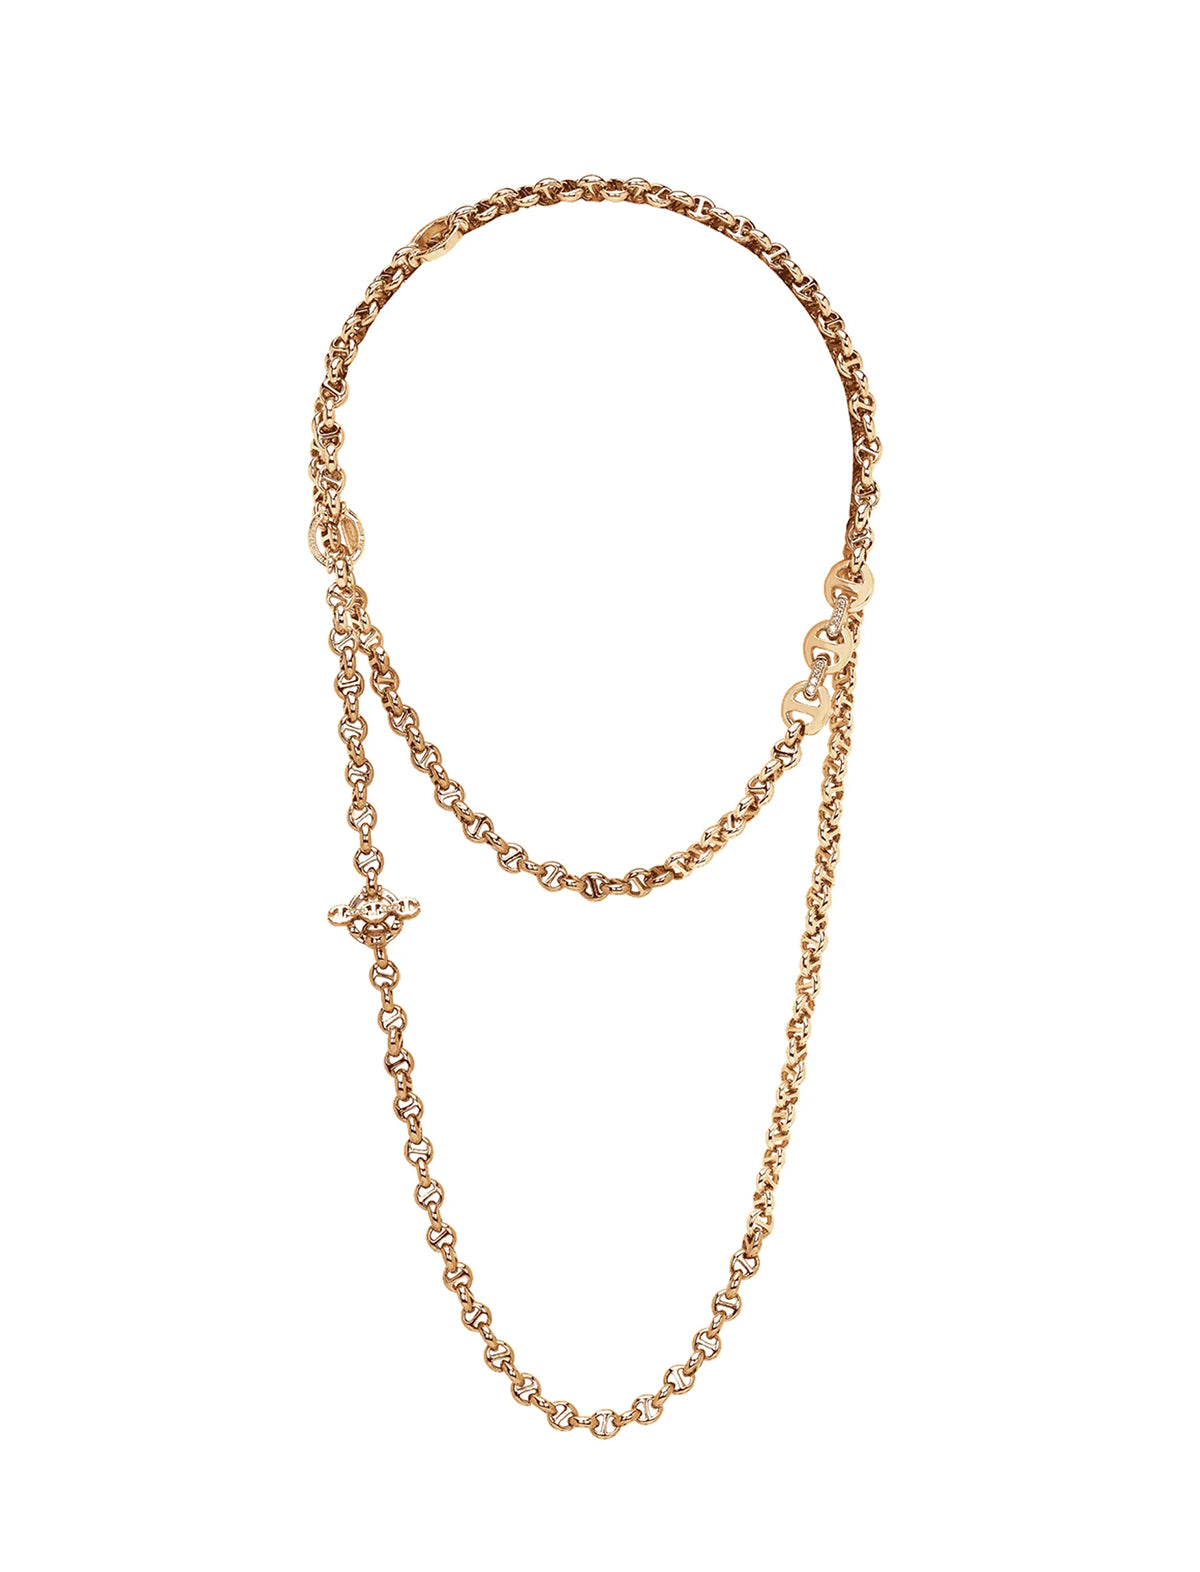 HOORSENBUHS 5mm Open-Link™ Necklace with Diamond Pendant 18k Yellow Gold